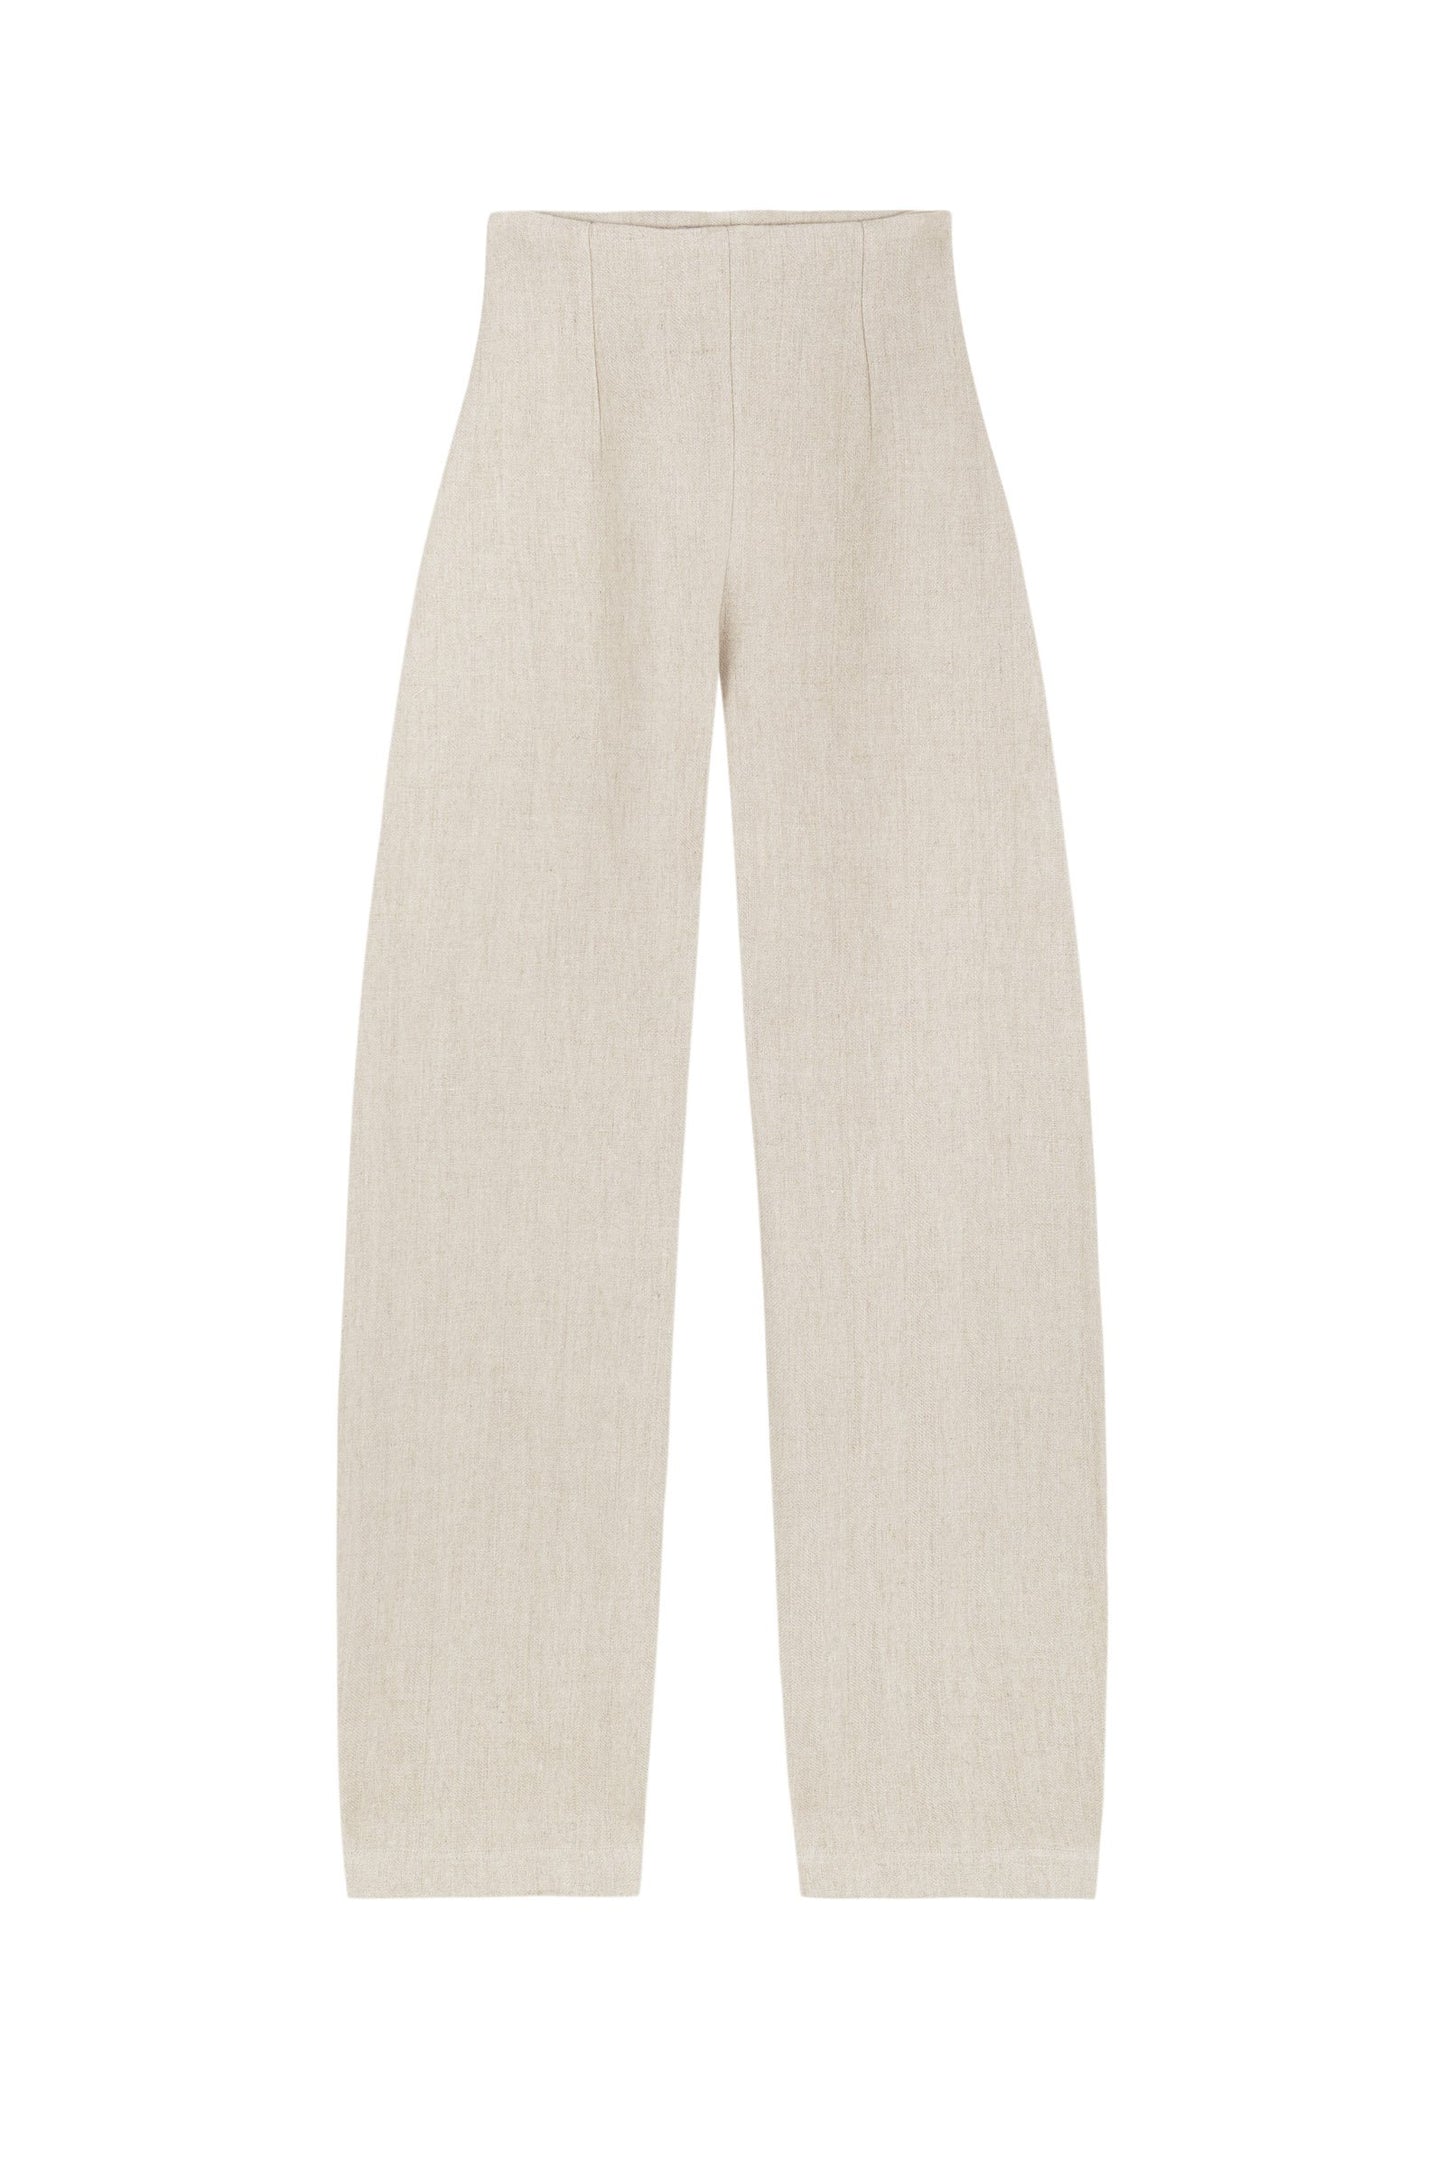 Dover, ecru linen and cashmere pants